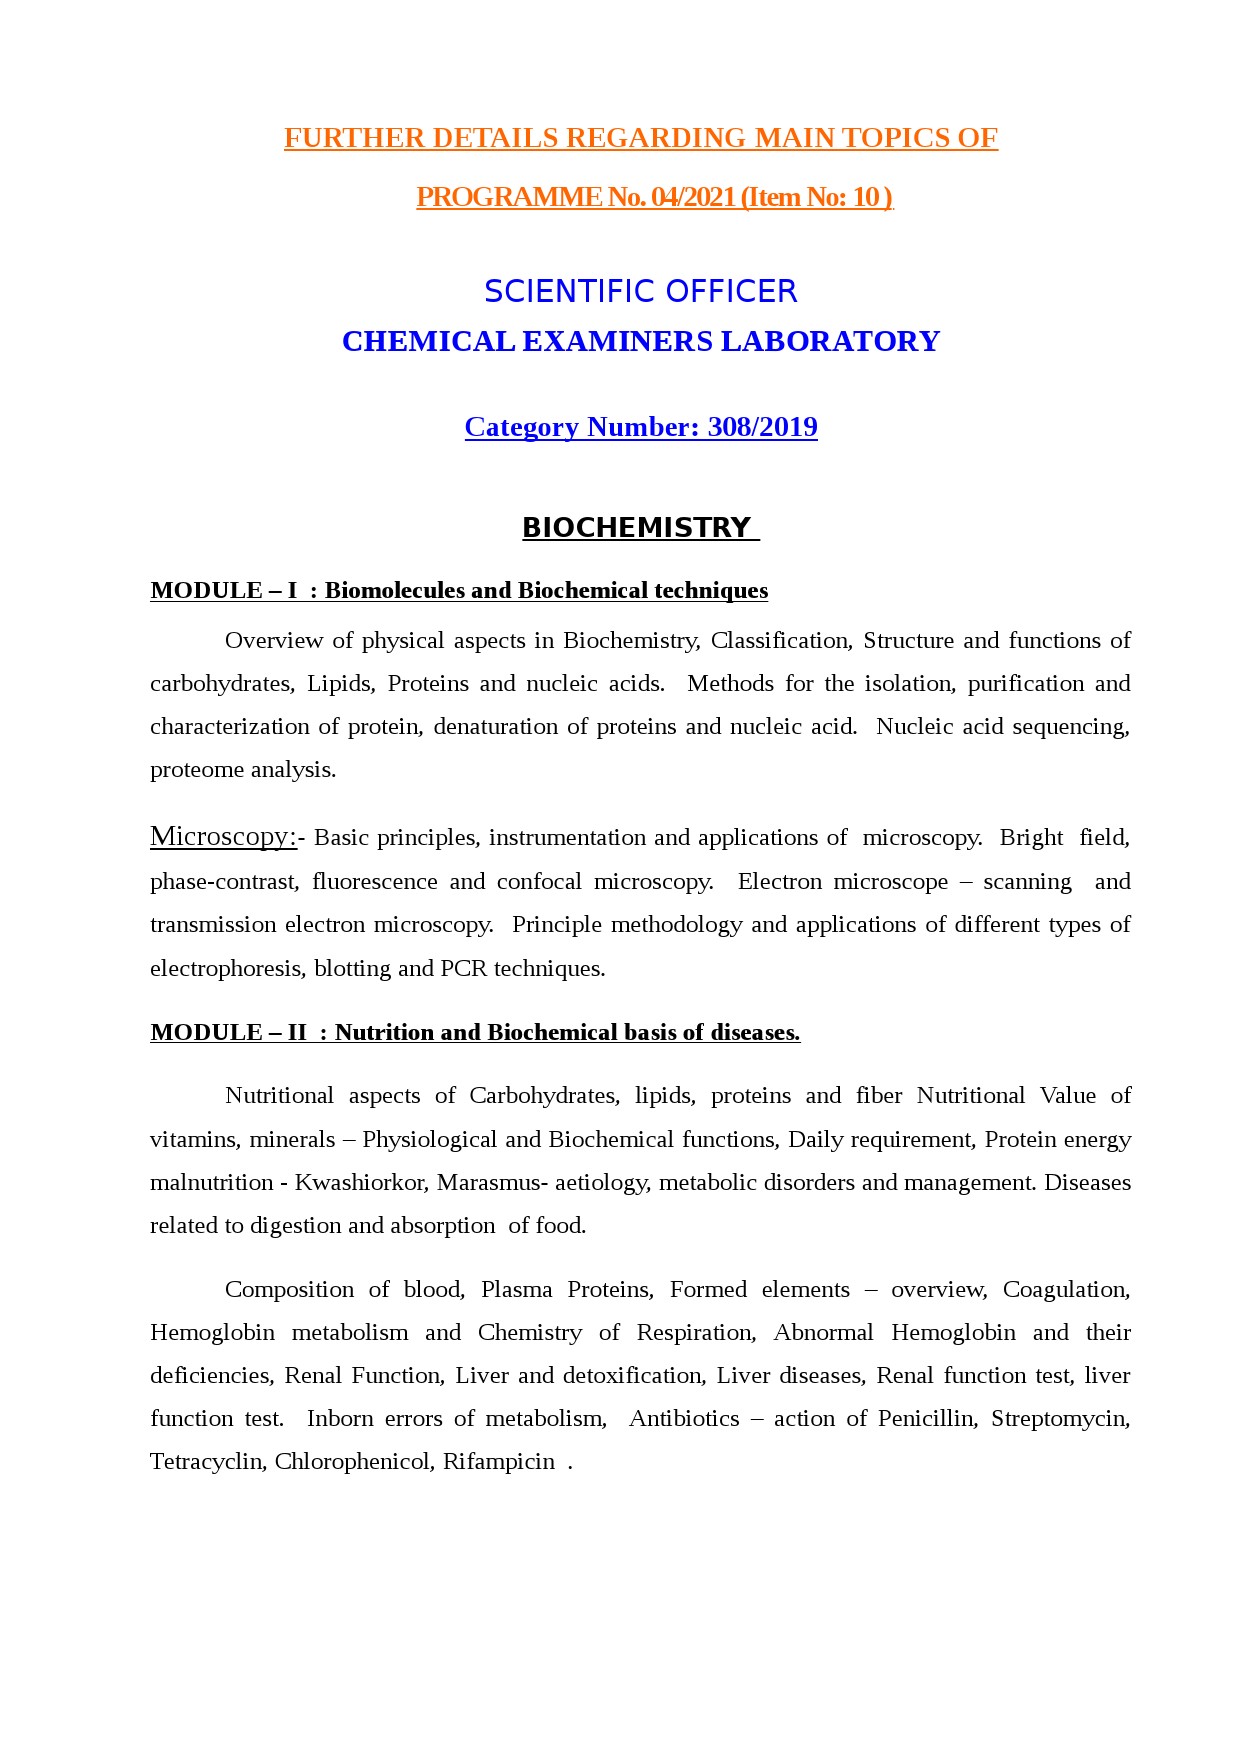 Scientific Officer Chemical Examiners Laboratory KPSC Exam Syllabus April 2021 - Notification Image 1